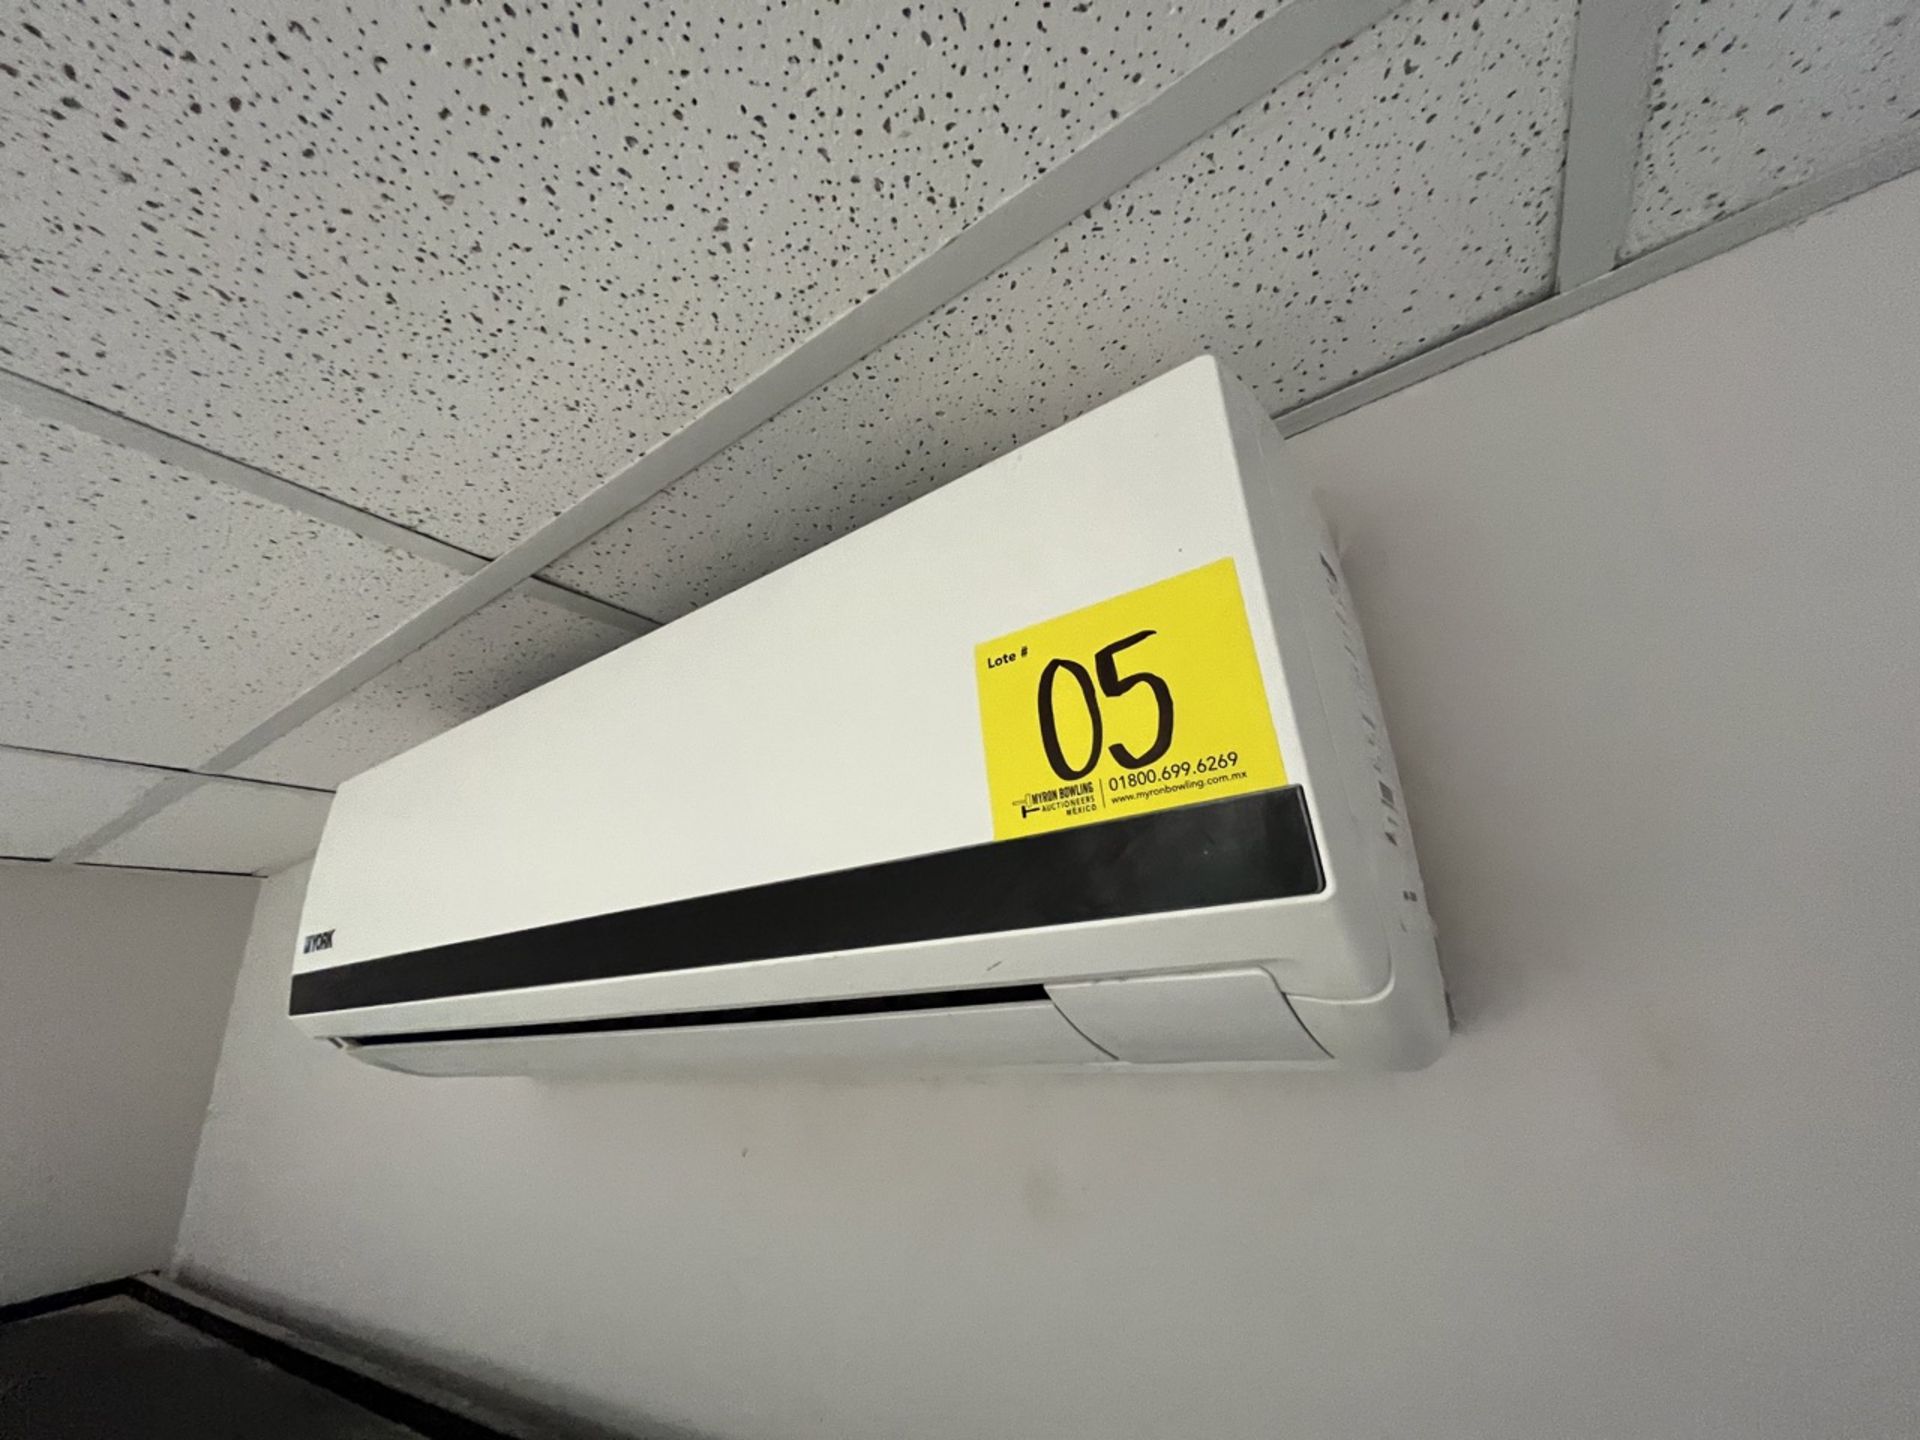 York minisplit air conditioner with control, Model YSEA12FS-ADK, Series 100001010140290128, 220 Vol - Image 4 of 11